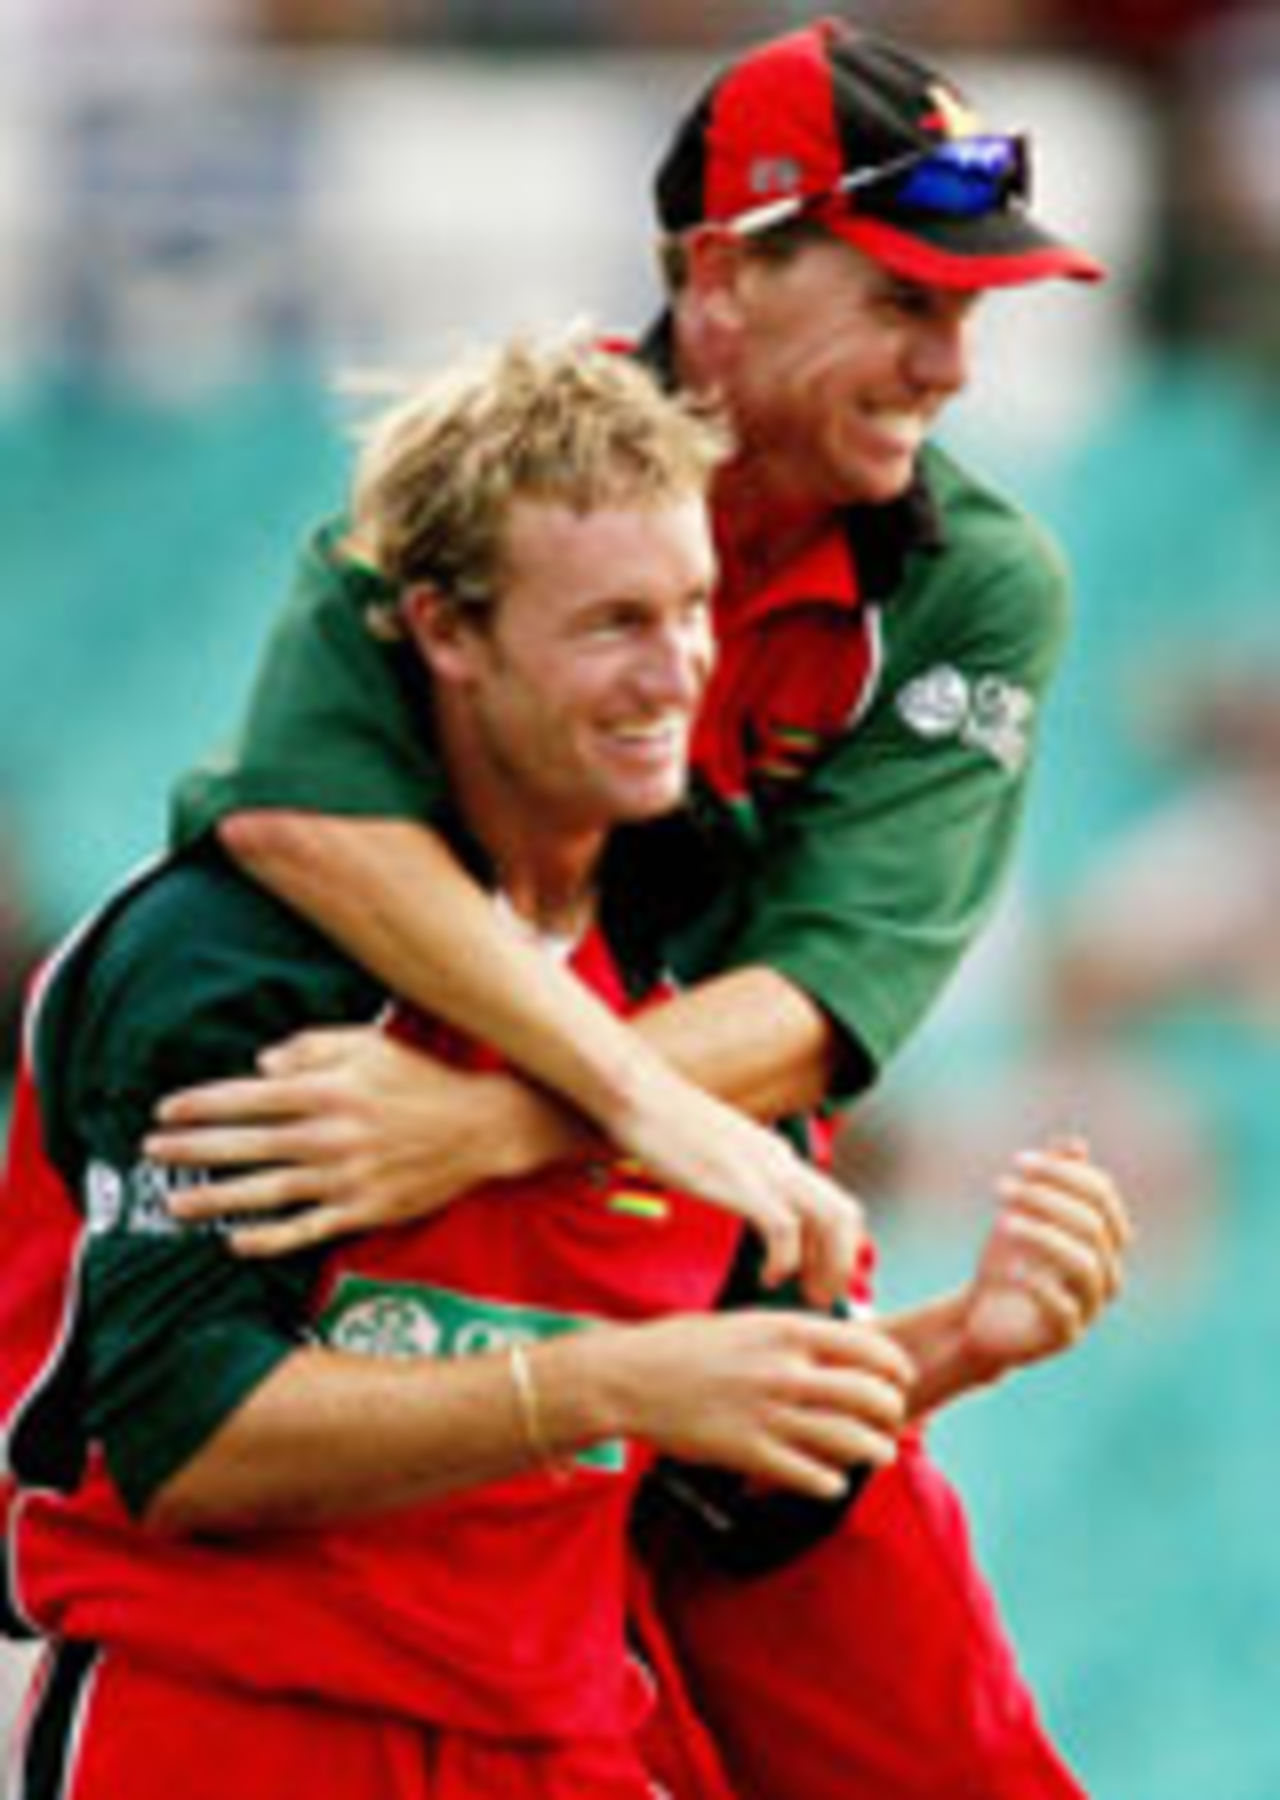 Sean Ervine celebrates with Ray Price after taking a wicket, Australia v Zimbabwe, Sydney, January 11, 2004